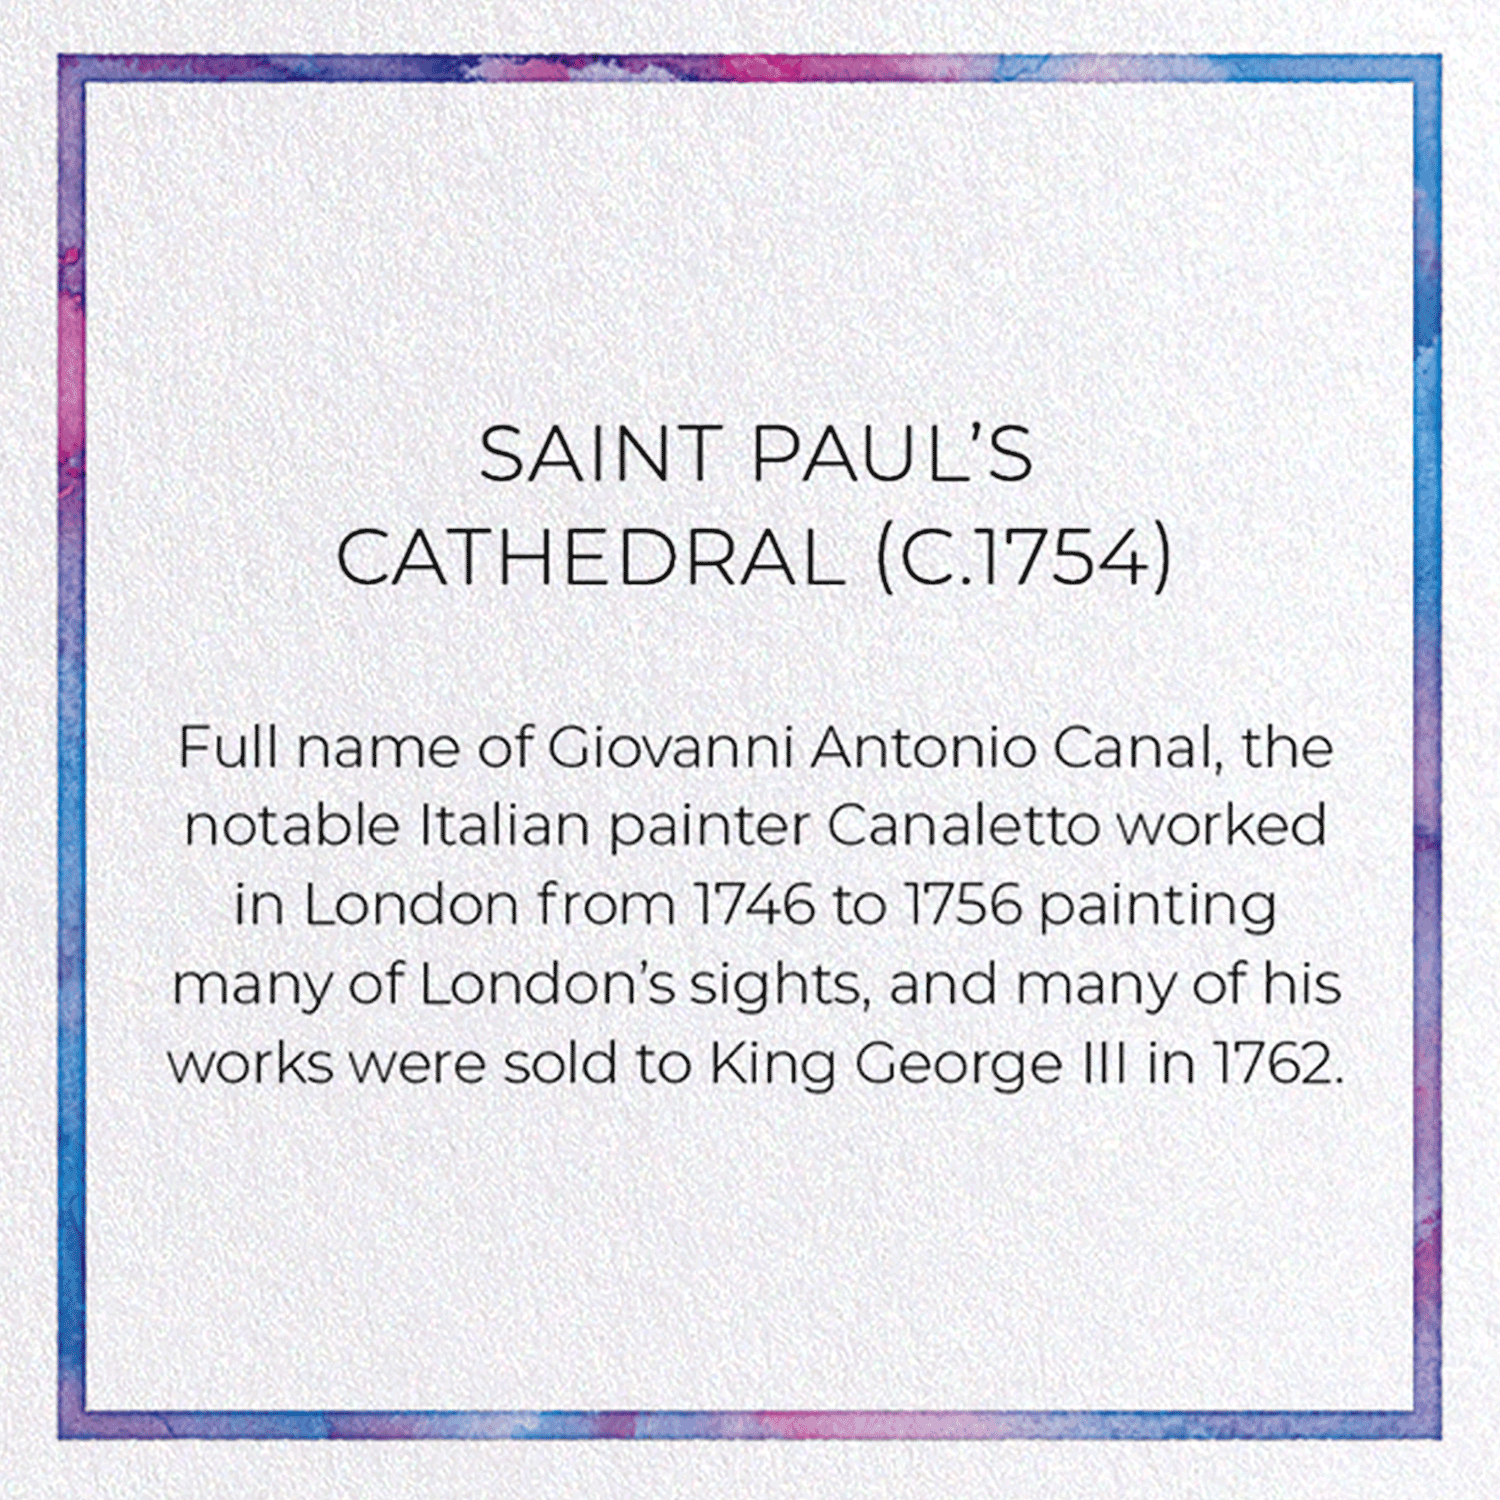 SAINT PAUL'S CATHEDRAL (C.1754)